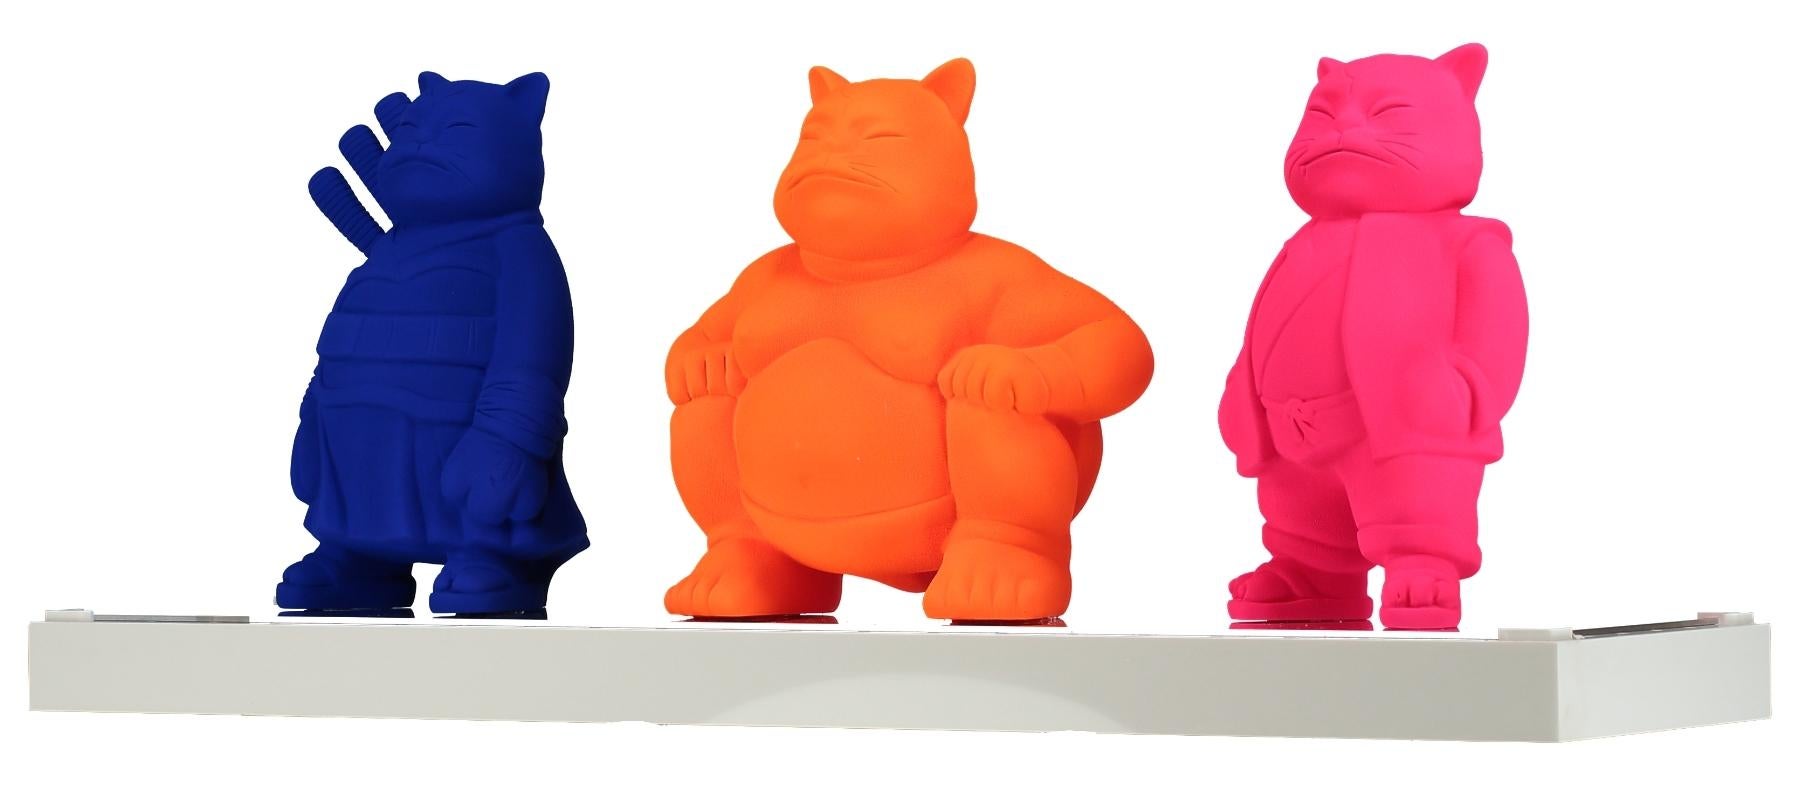 Trilogy Samuraicat Blu, Sumocat Orange, Urbancat Pink : Feline Odyssey - Contemporary Sculpture by HIRO ANDO